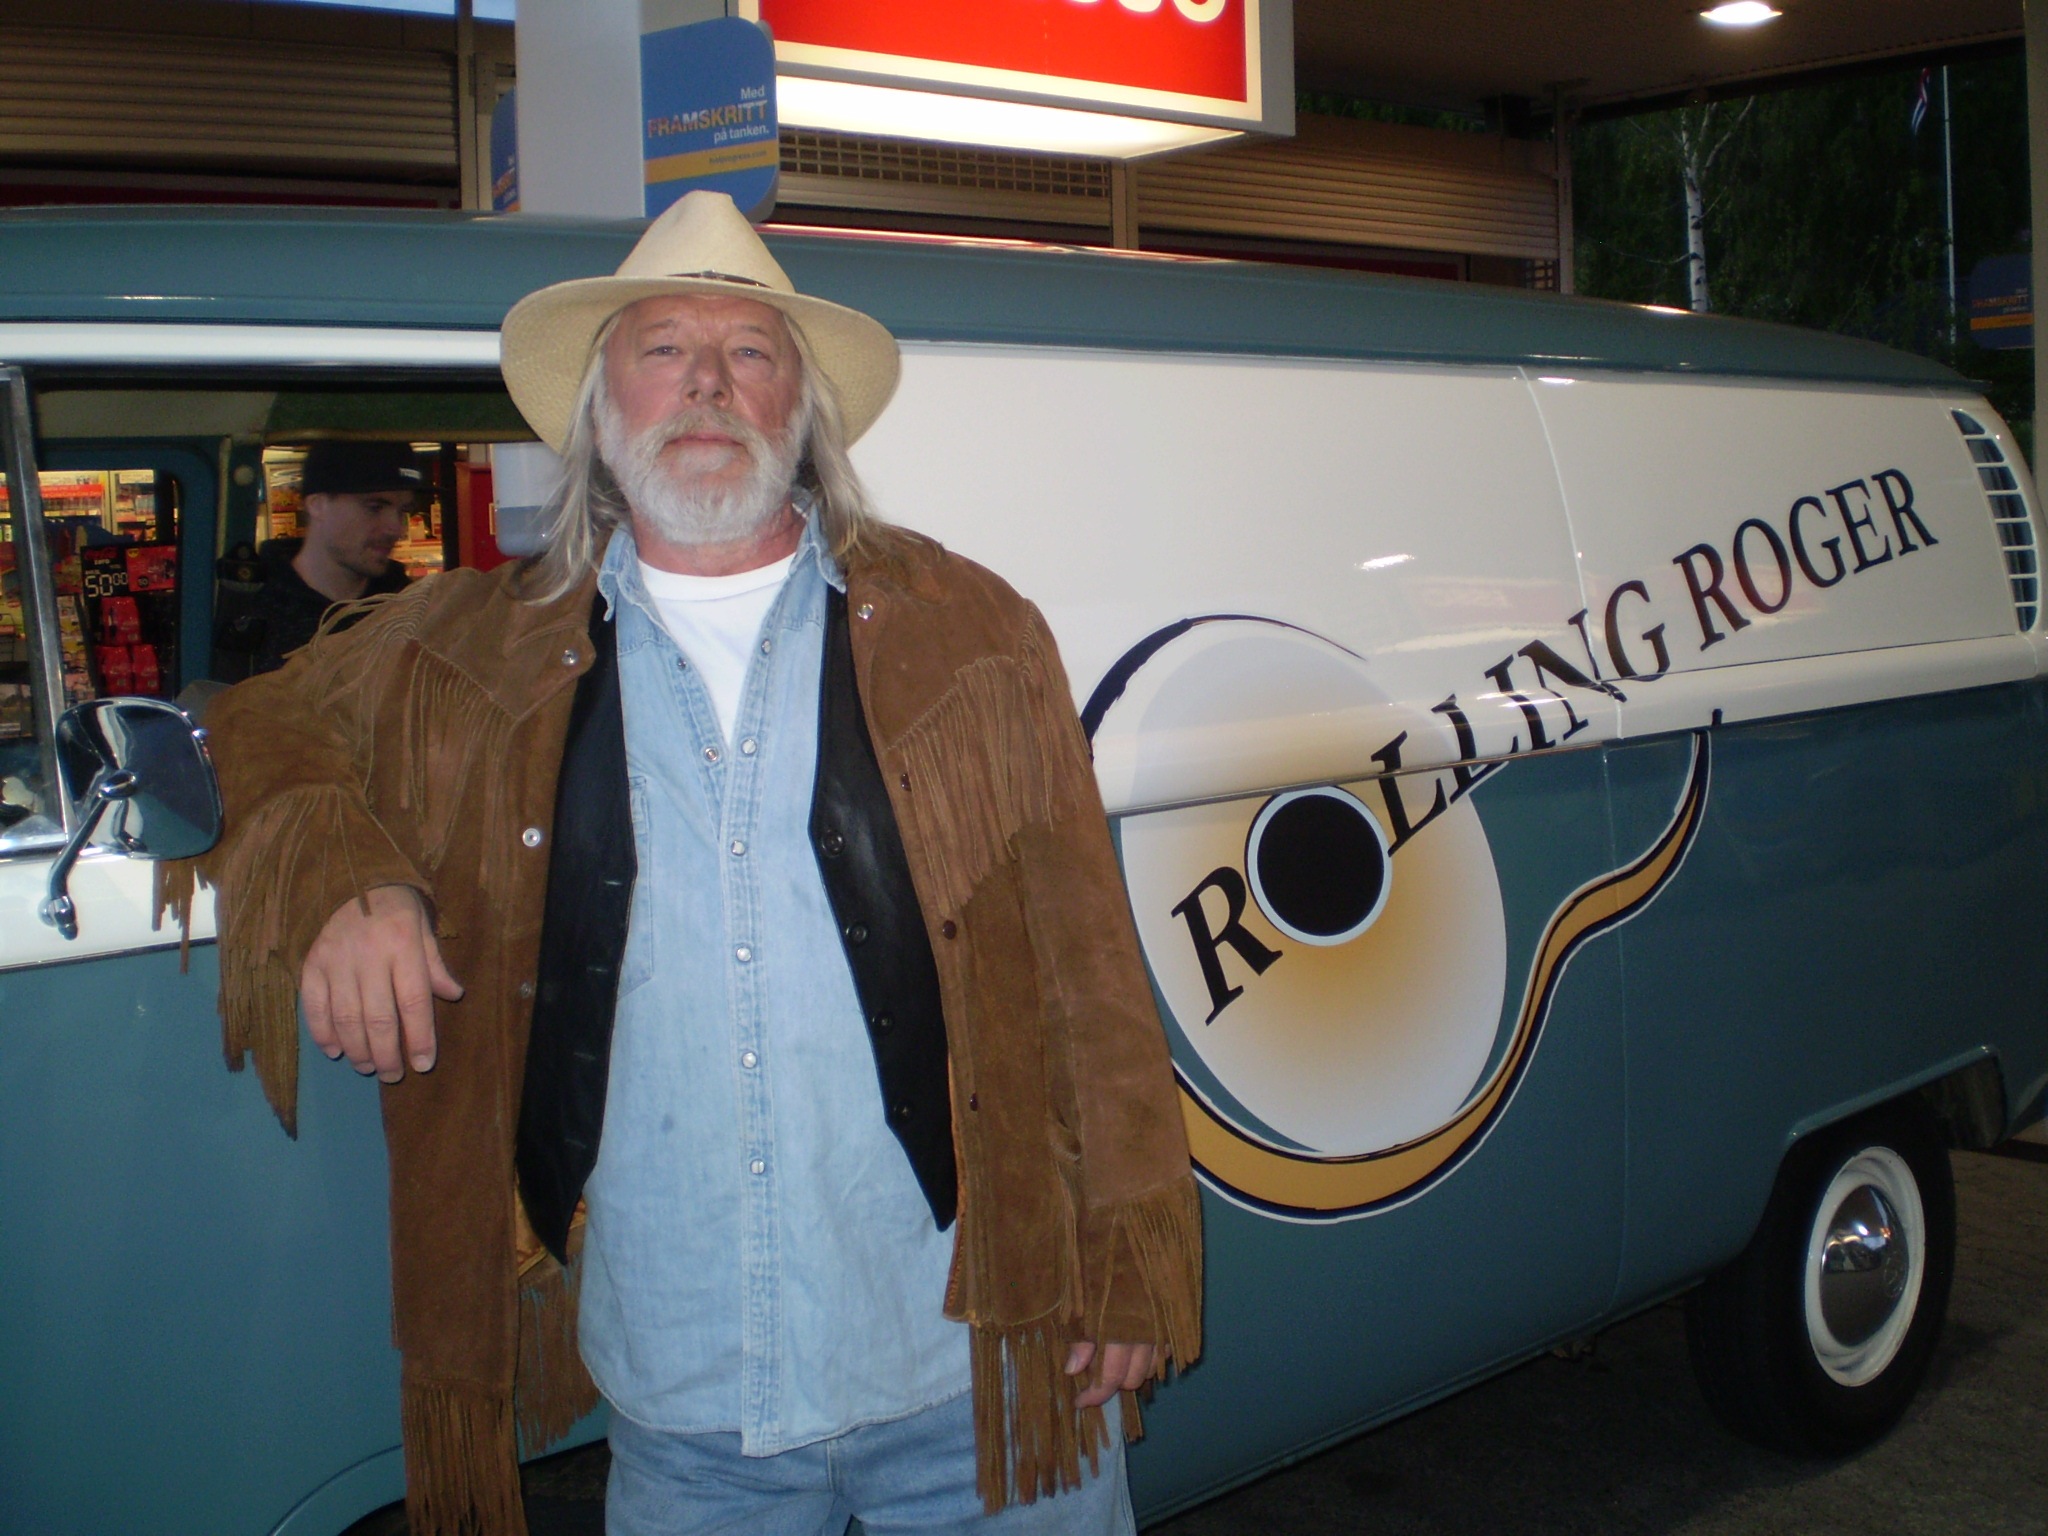 'Rolling Roger' vagabond entertainer...